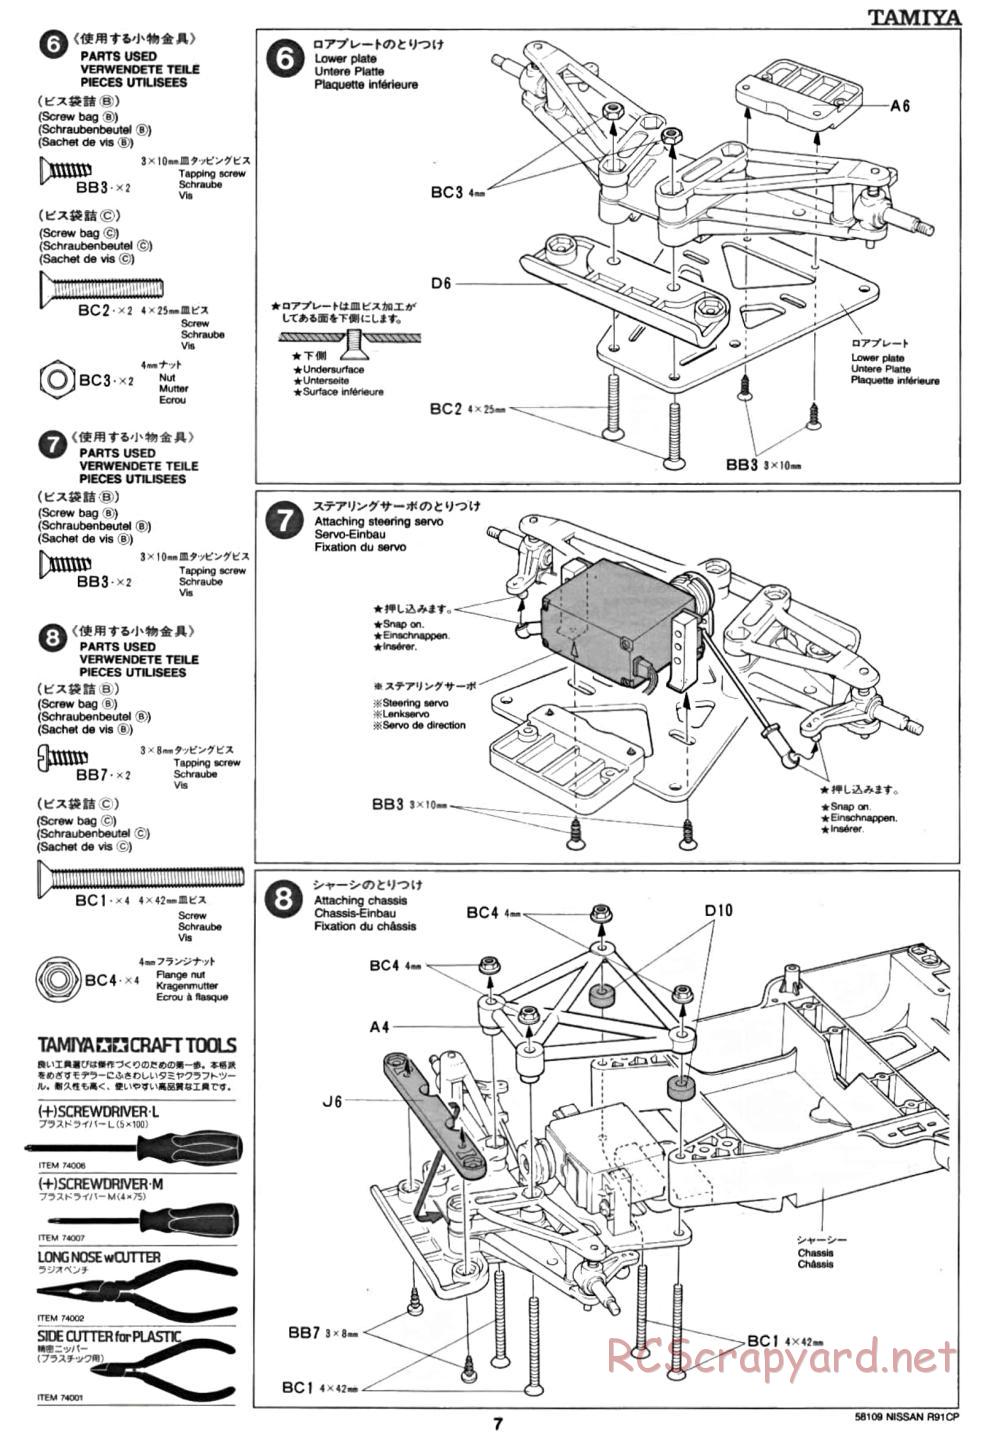 Tamiya - Nissan R91CP - Group-C Chassis - Manual - Page 7